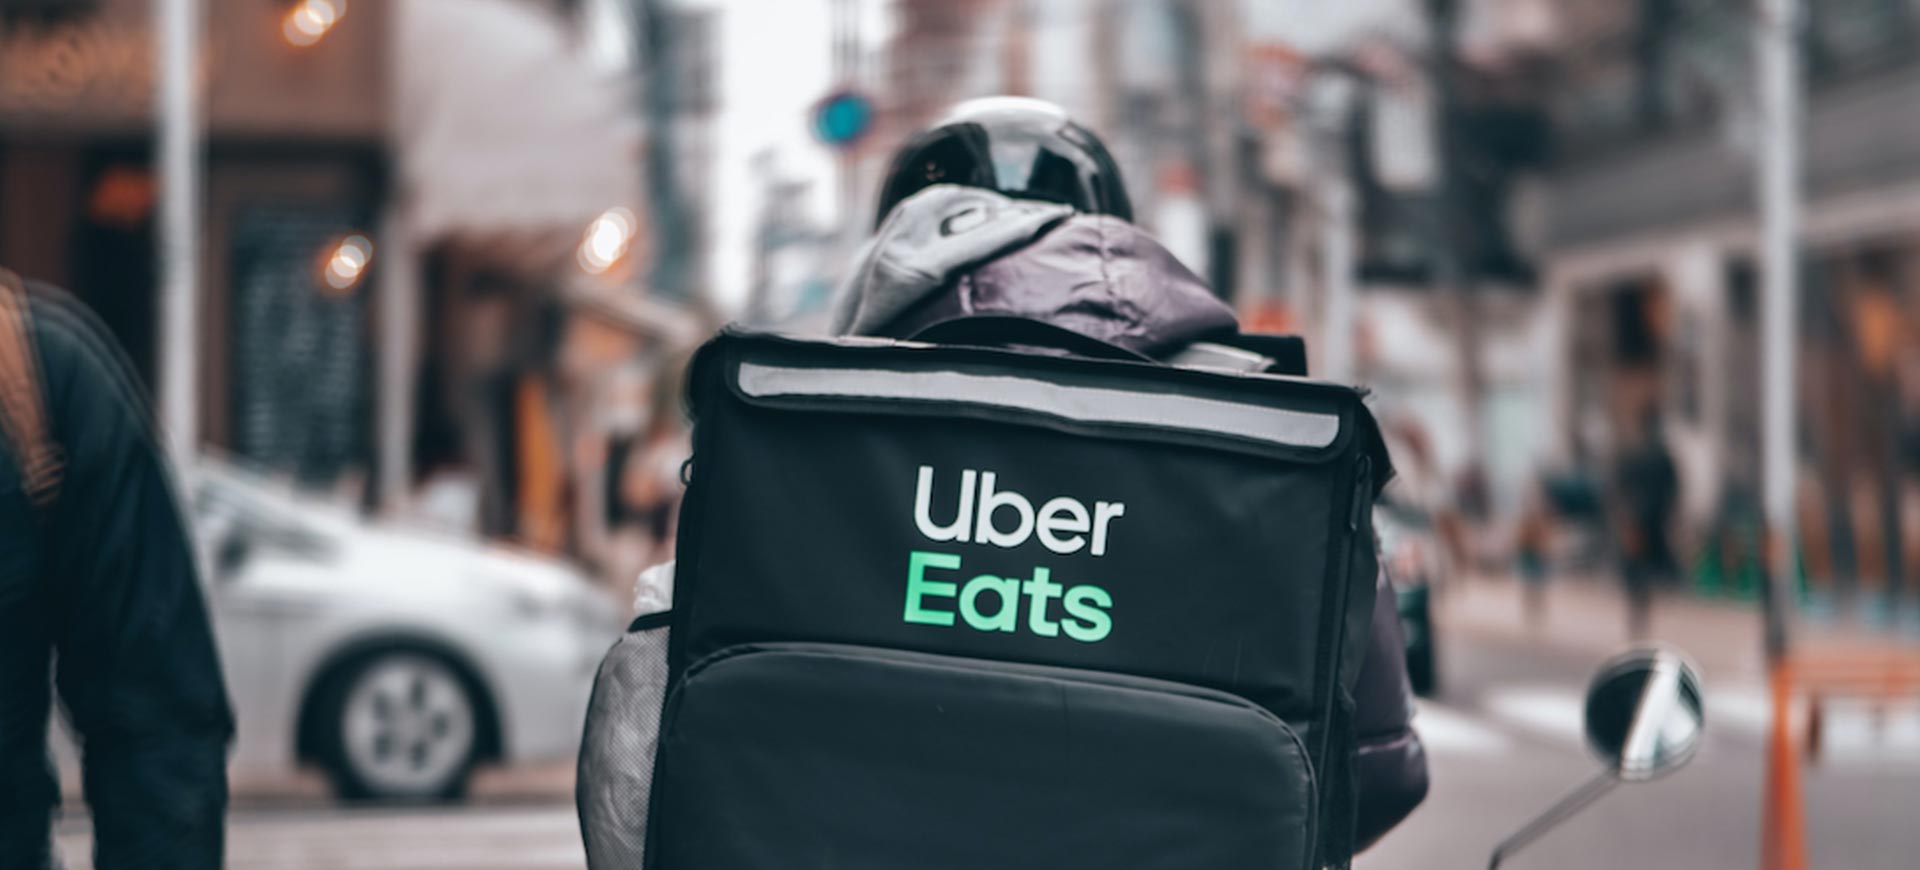 uber_eats_header